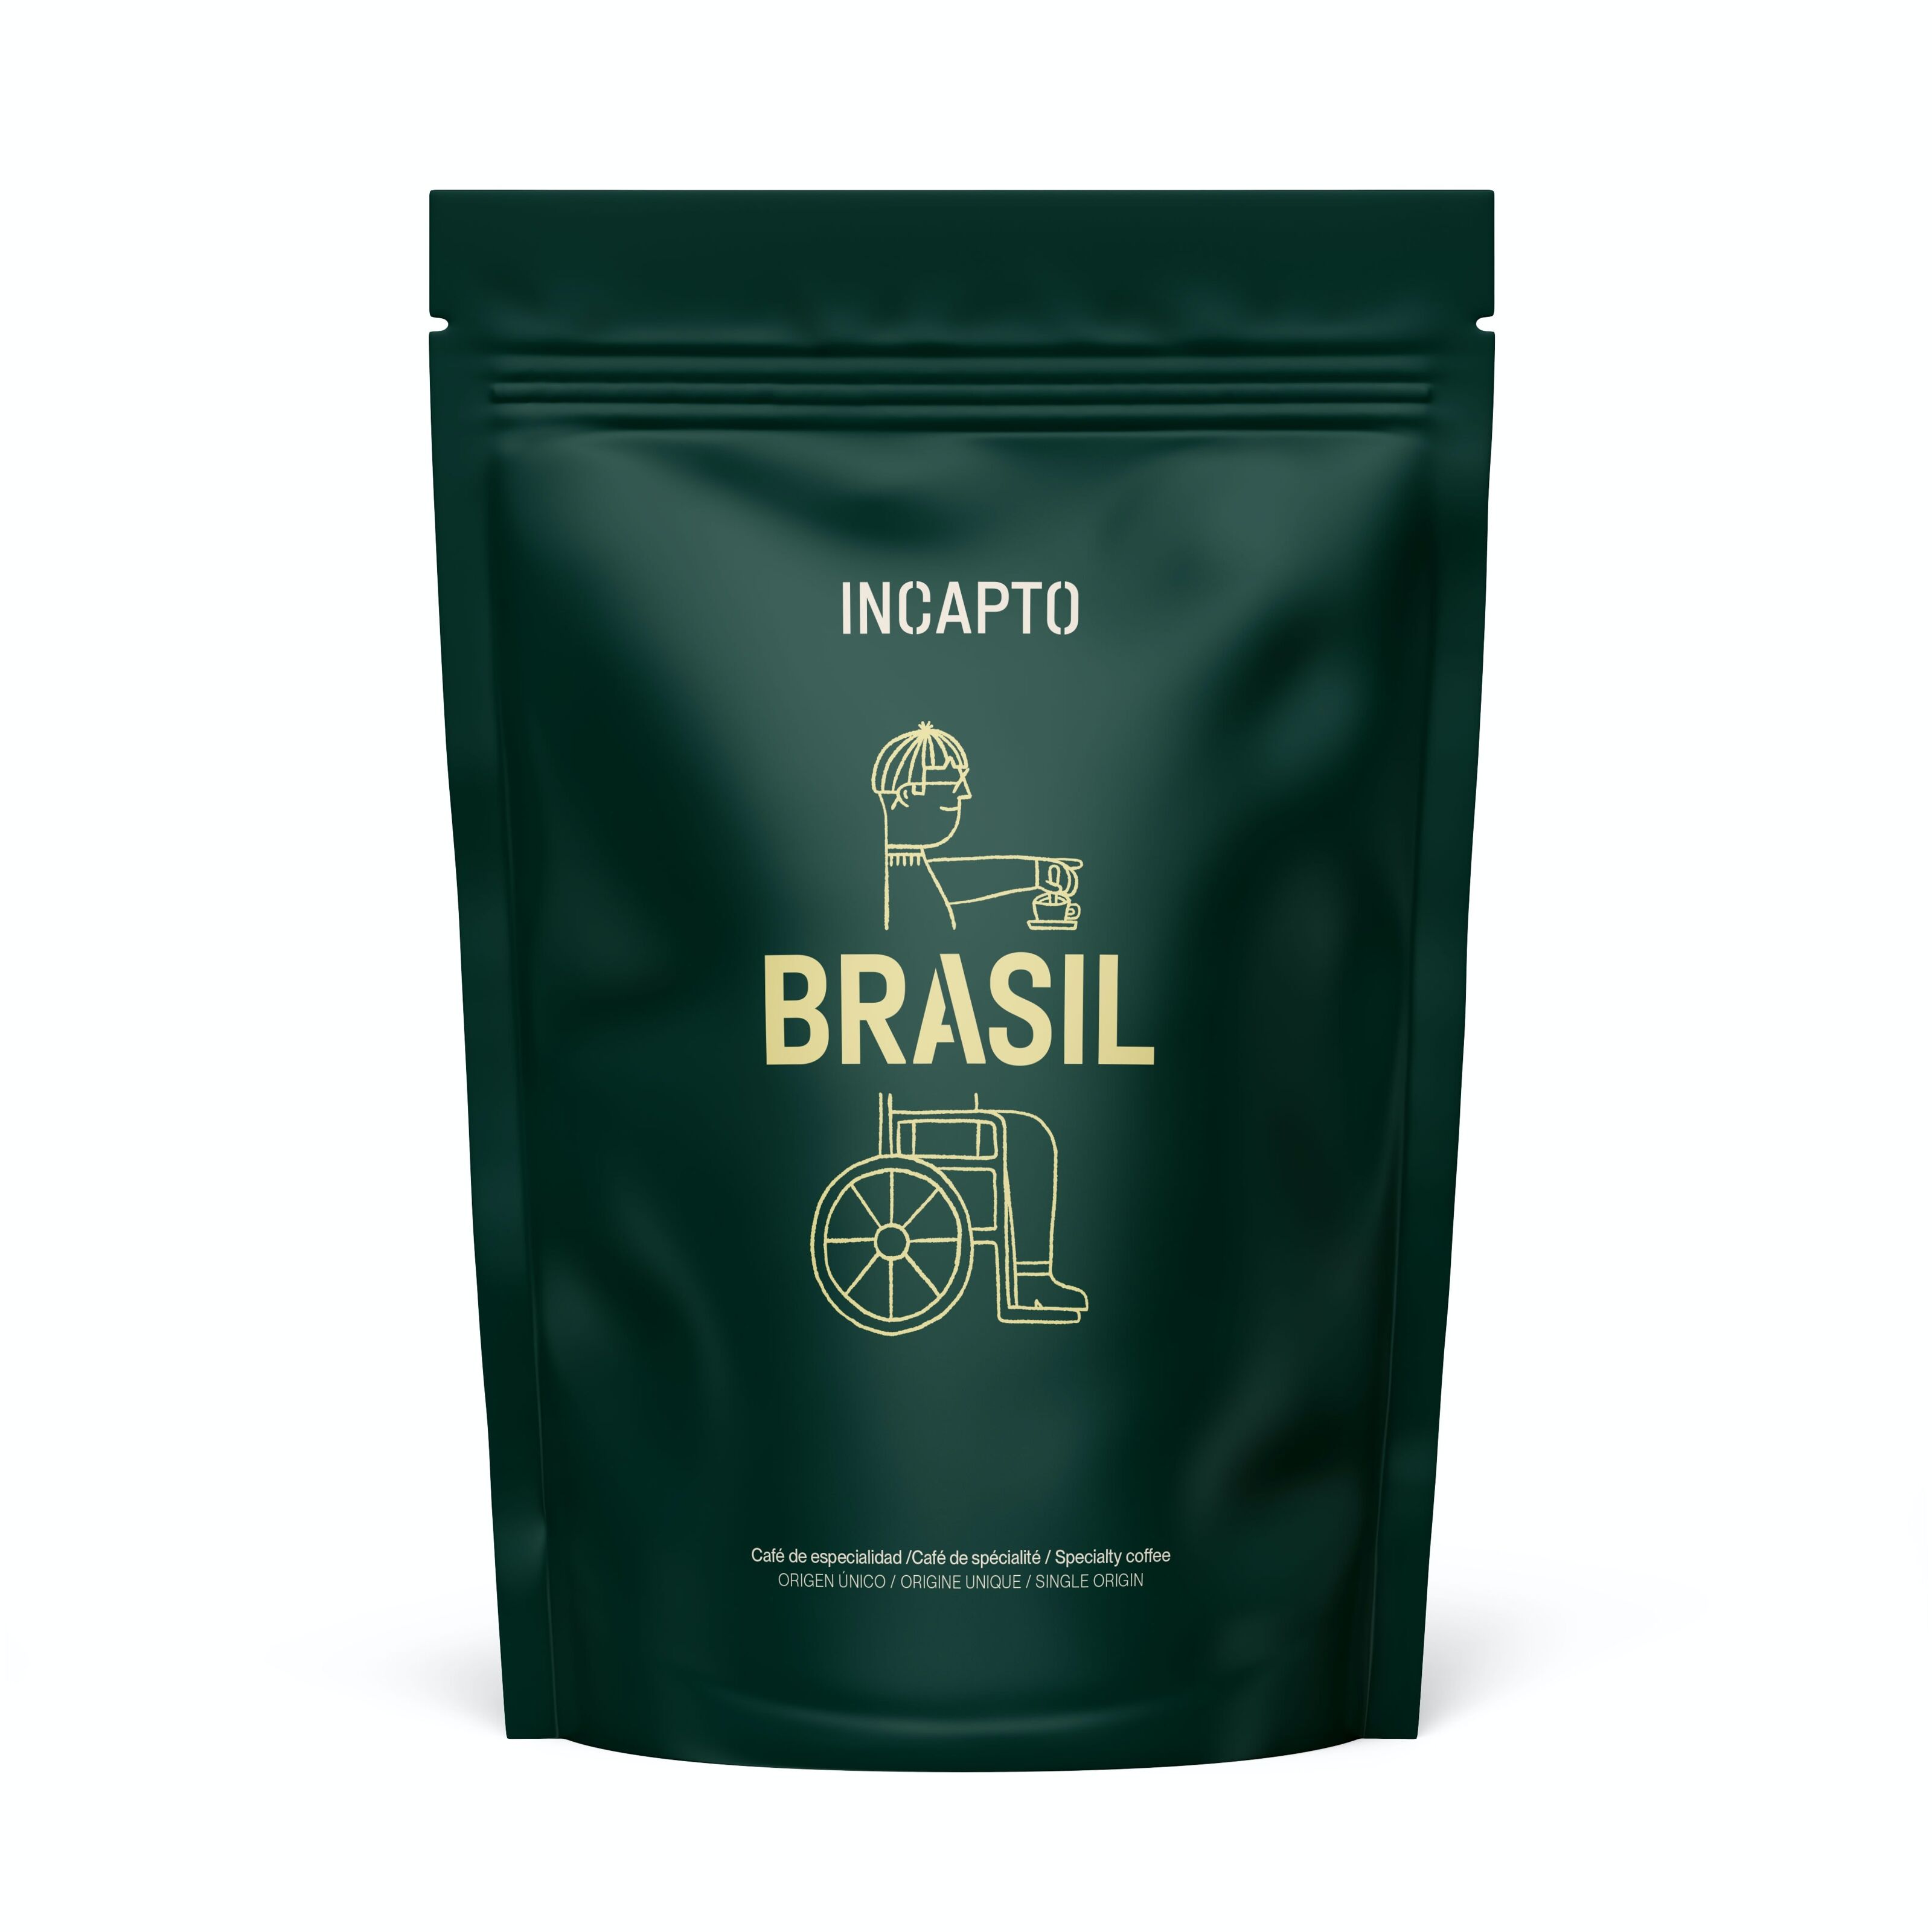 Compra Café en Grano Natural INCAPTO - Café de Especialidad, Origen BRASIL